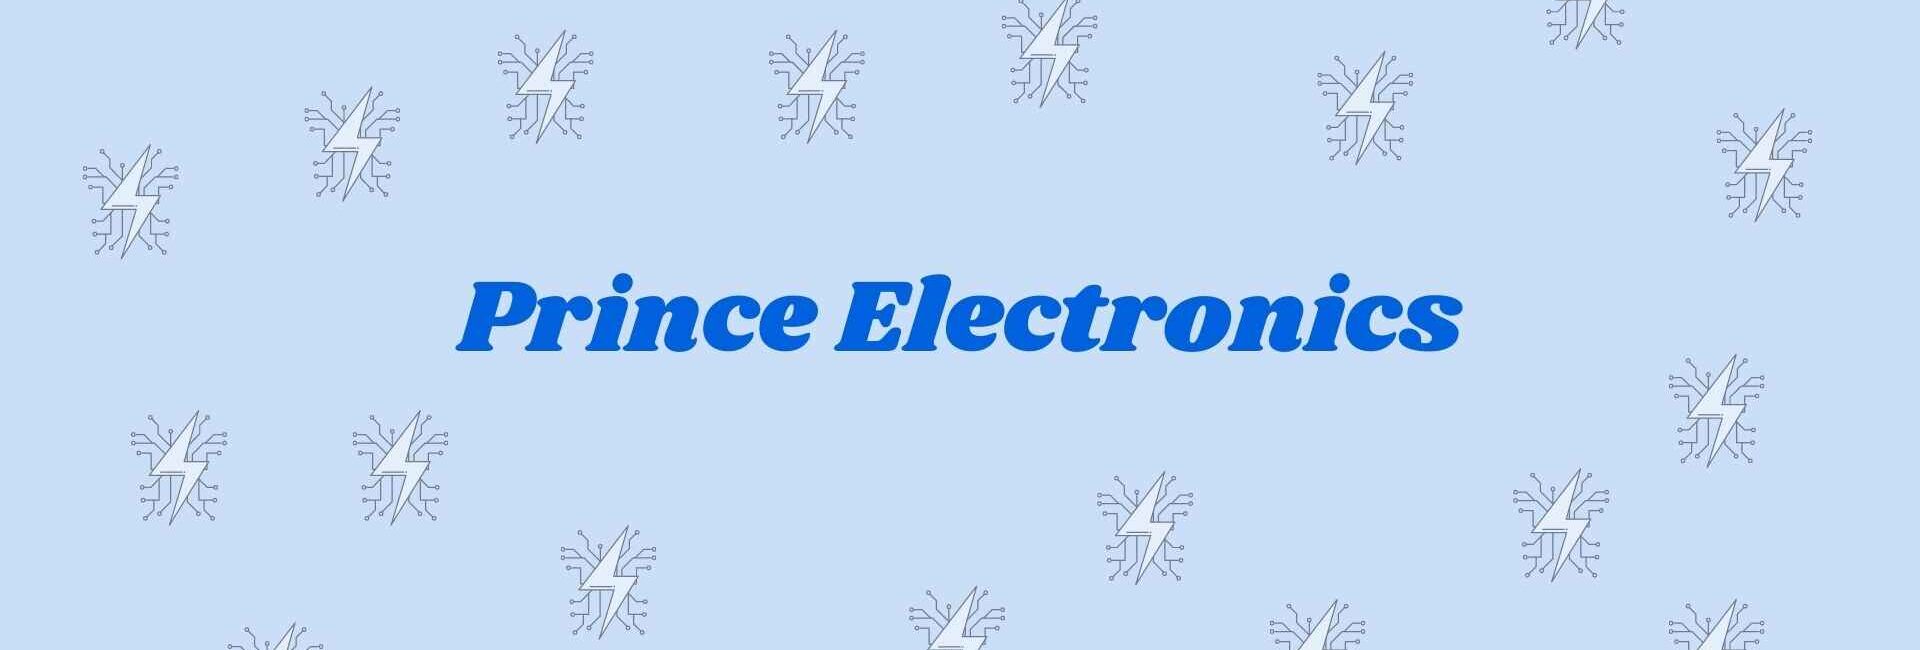 Prince Electronics - Electronics Goods Dealer in Noida